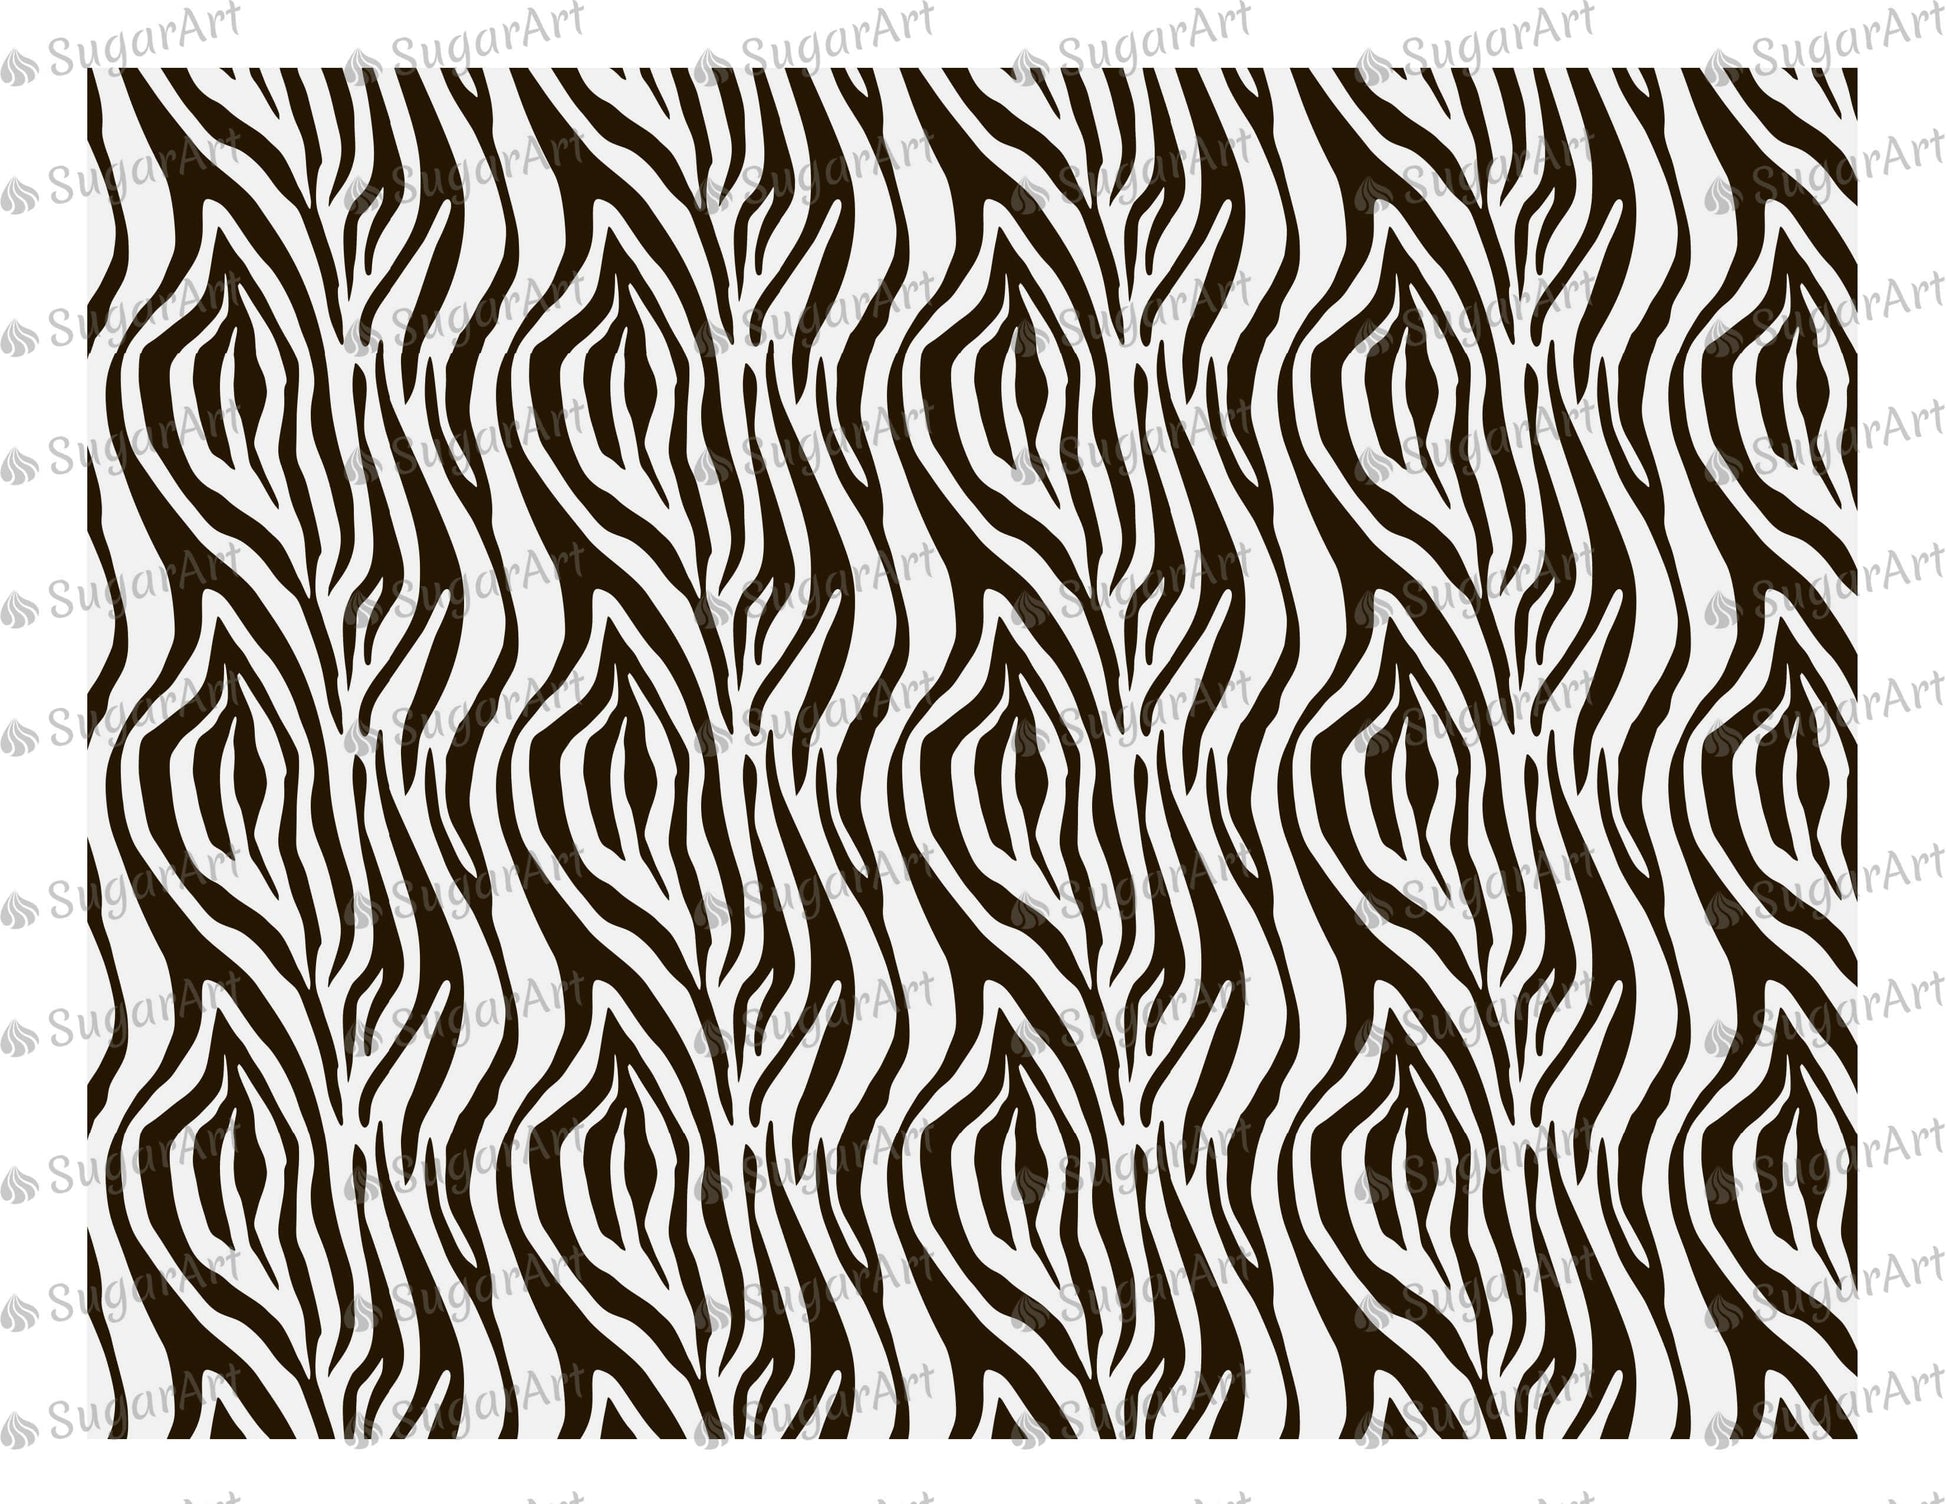 Zebra Print in Black and White - Icing - ISA040.